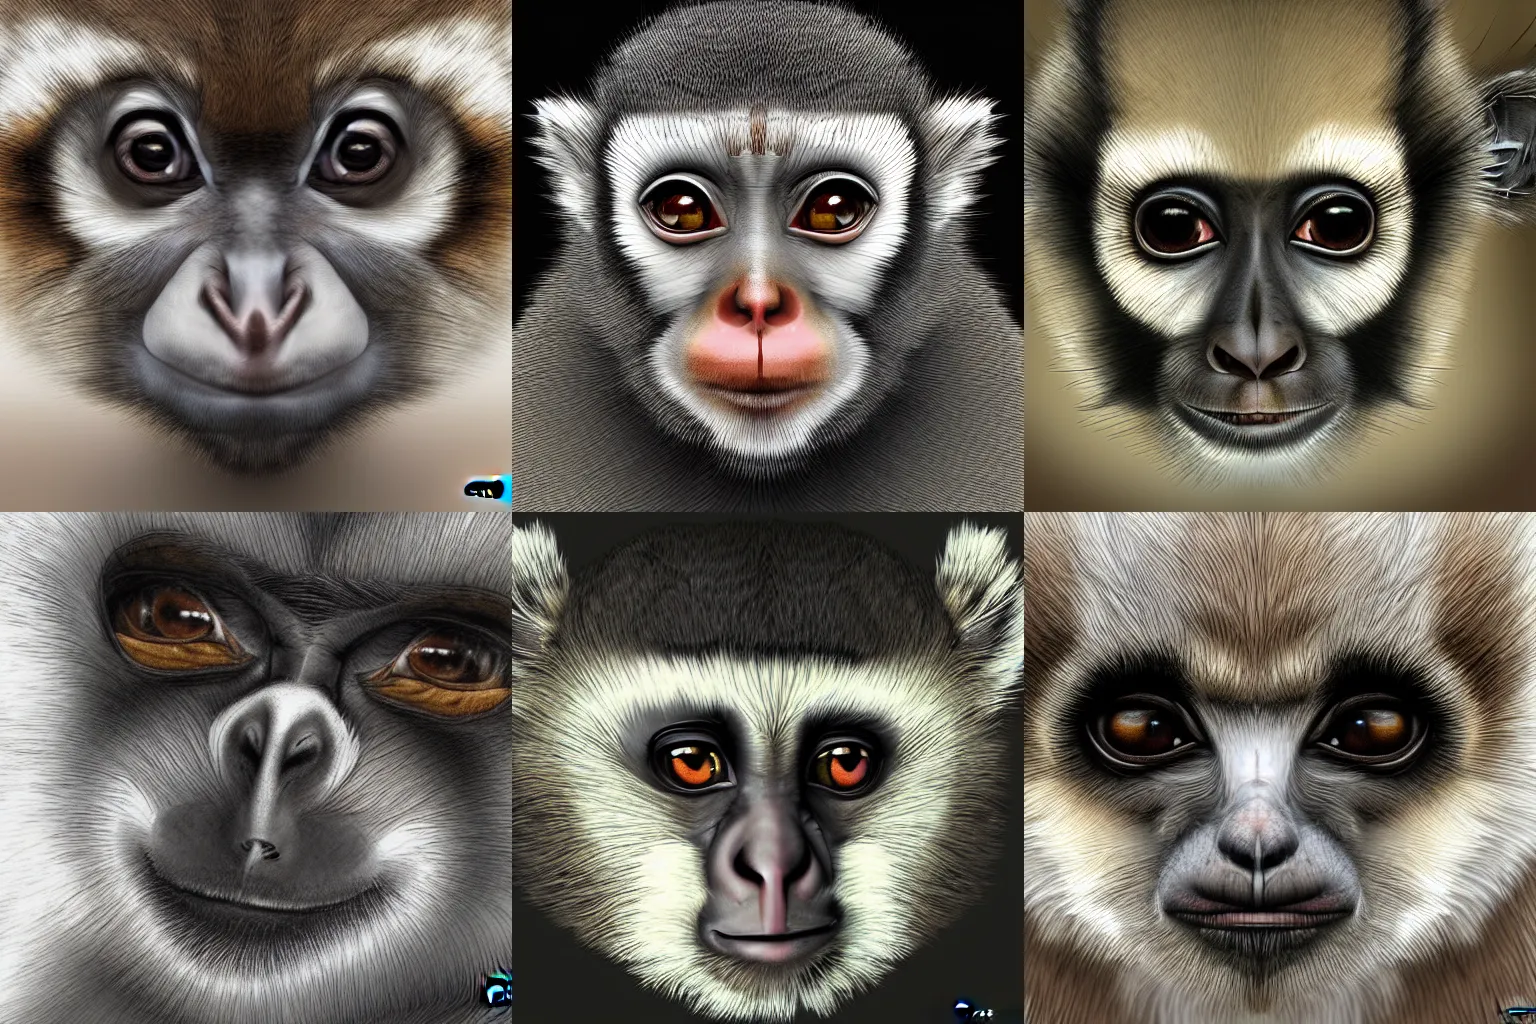 Prompt: highly detailed face of a capuchin lemur, digital art by Kentaro Miura